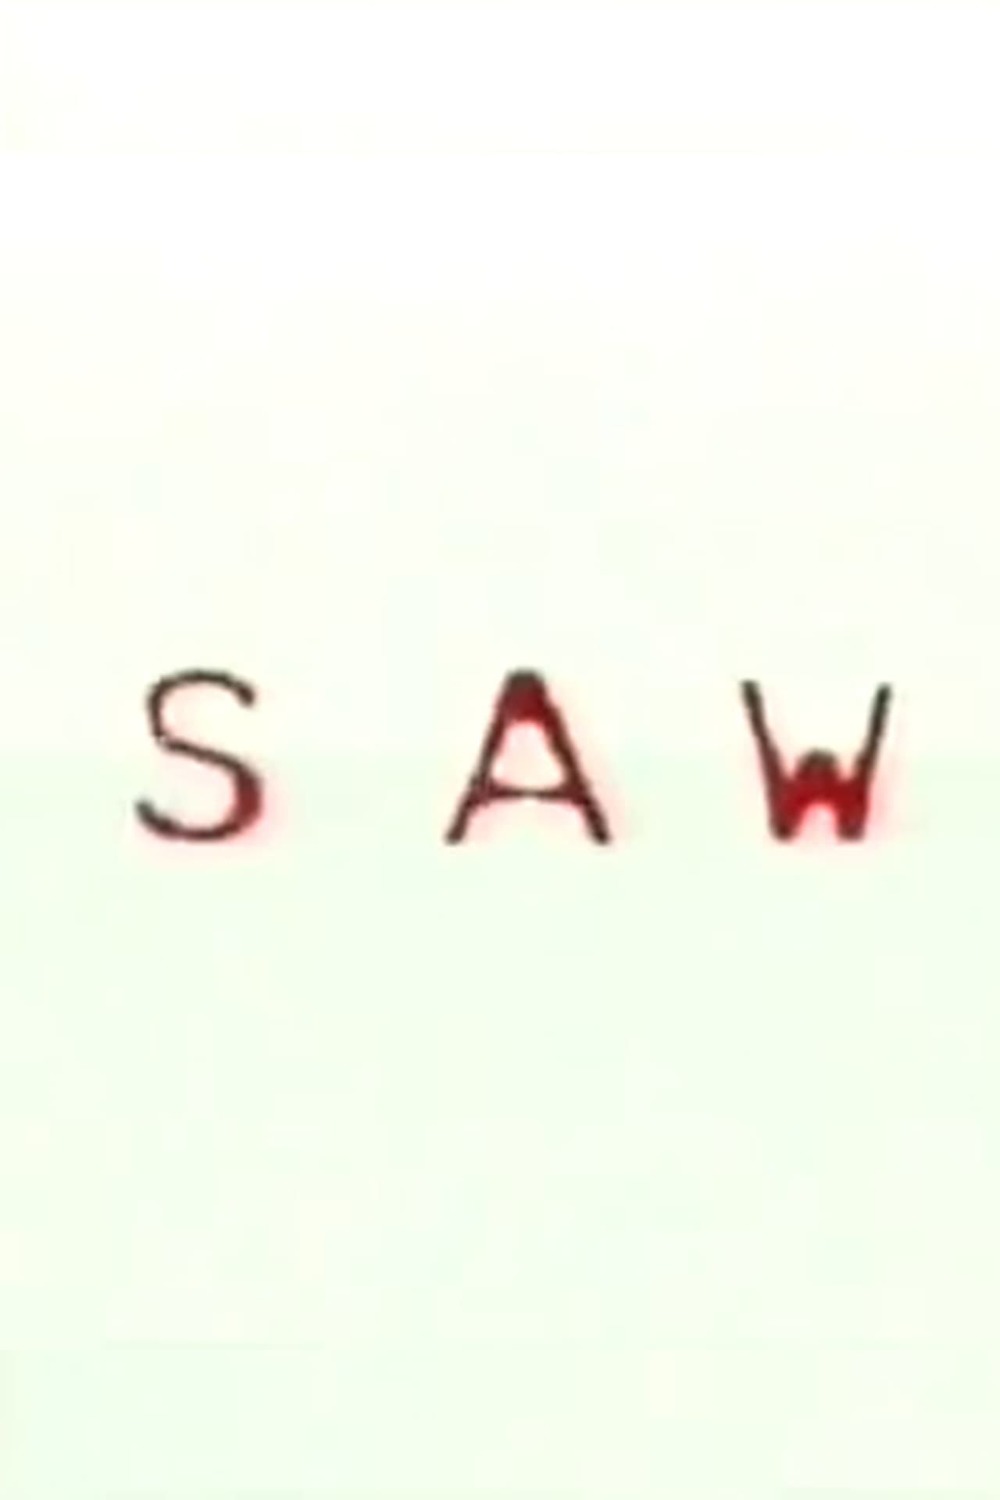 Saw | Fandíme filmu